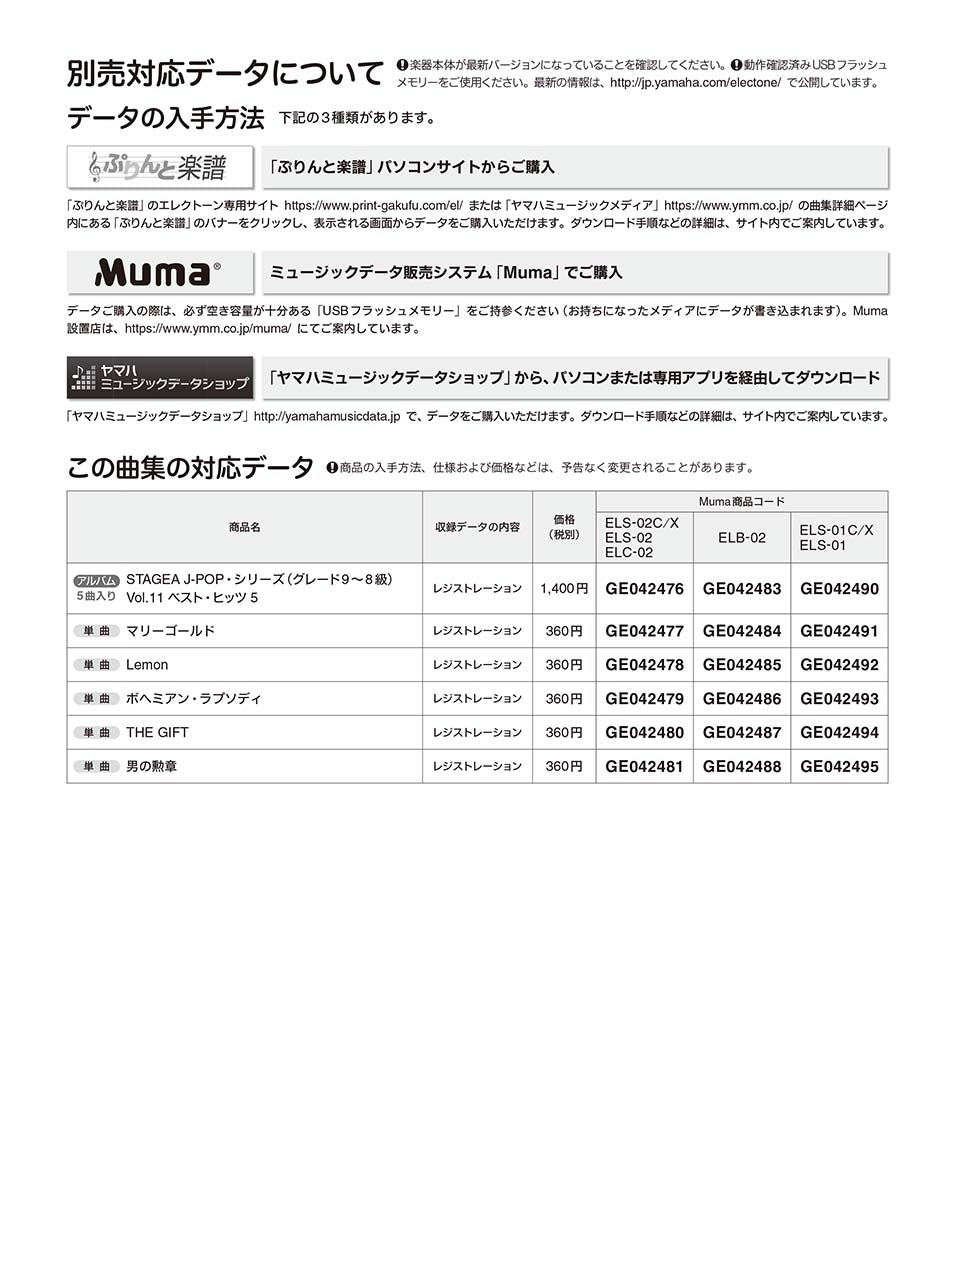 STAGEA J-POP 9～8級 Vol.11 ベスト・ヒッツ5_1